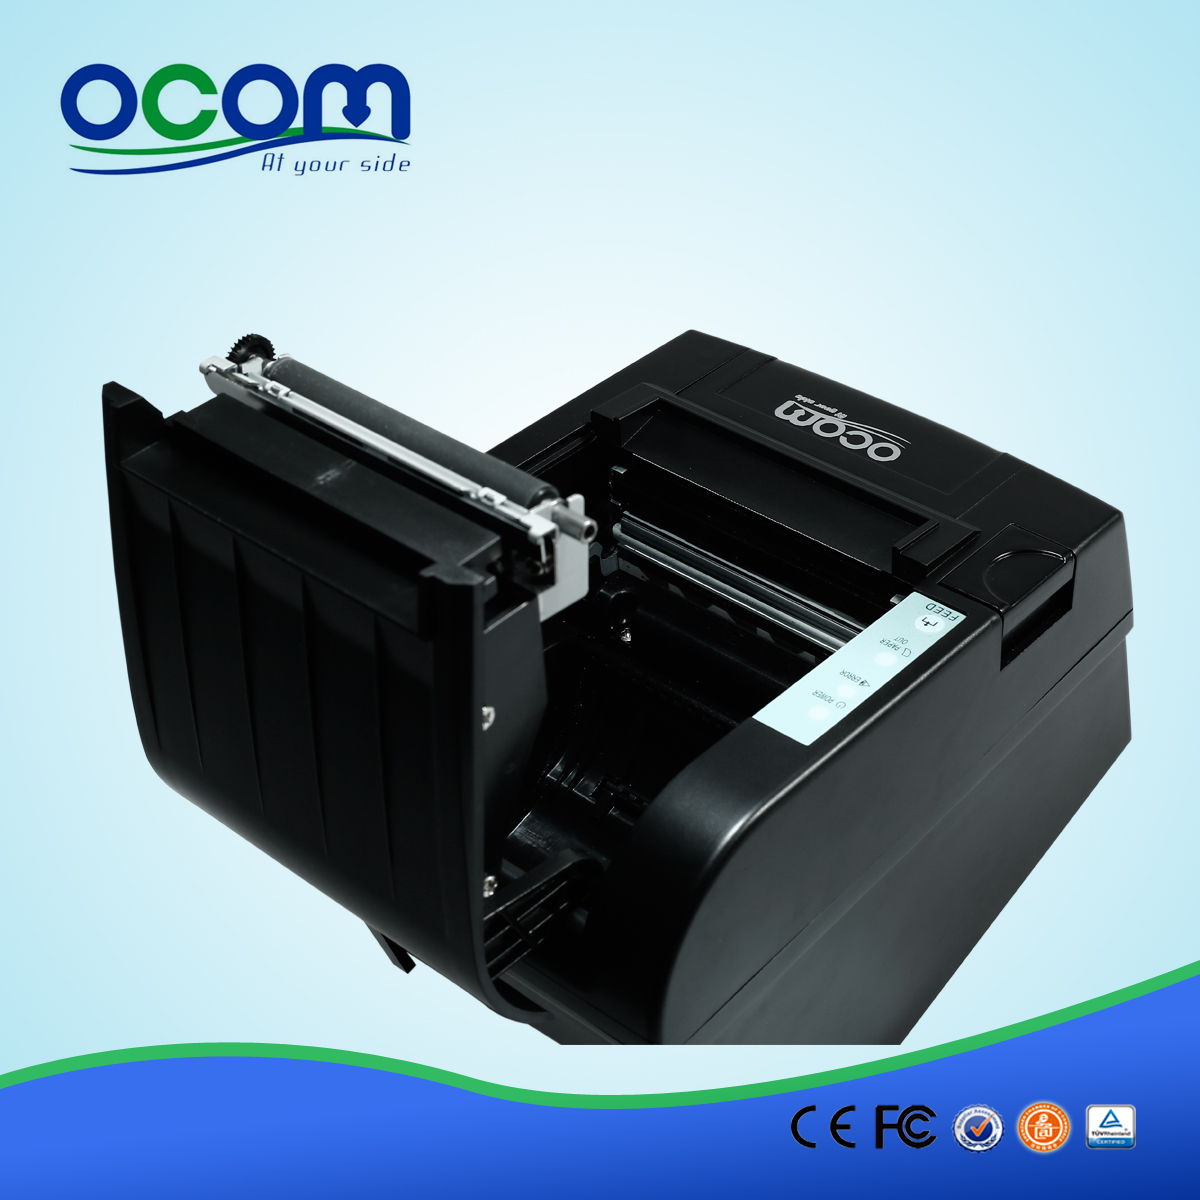 80 millimetri Wifi Thermal Receipt Printer OCPP-806-W